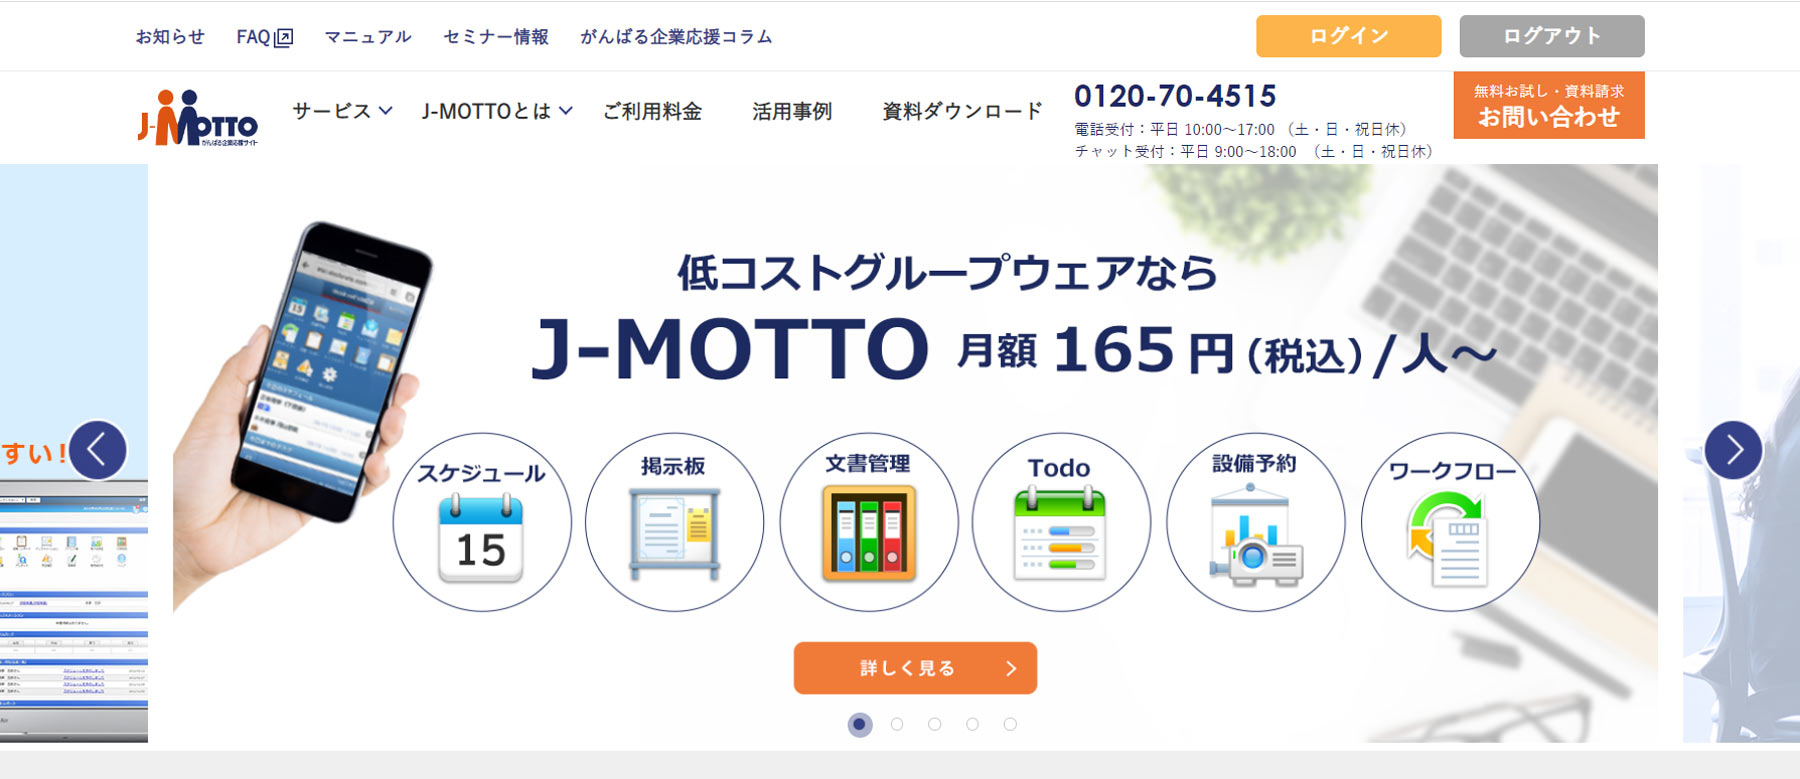 J-MOTTO公式Webサイト